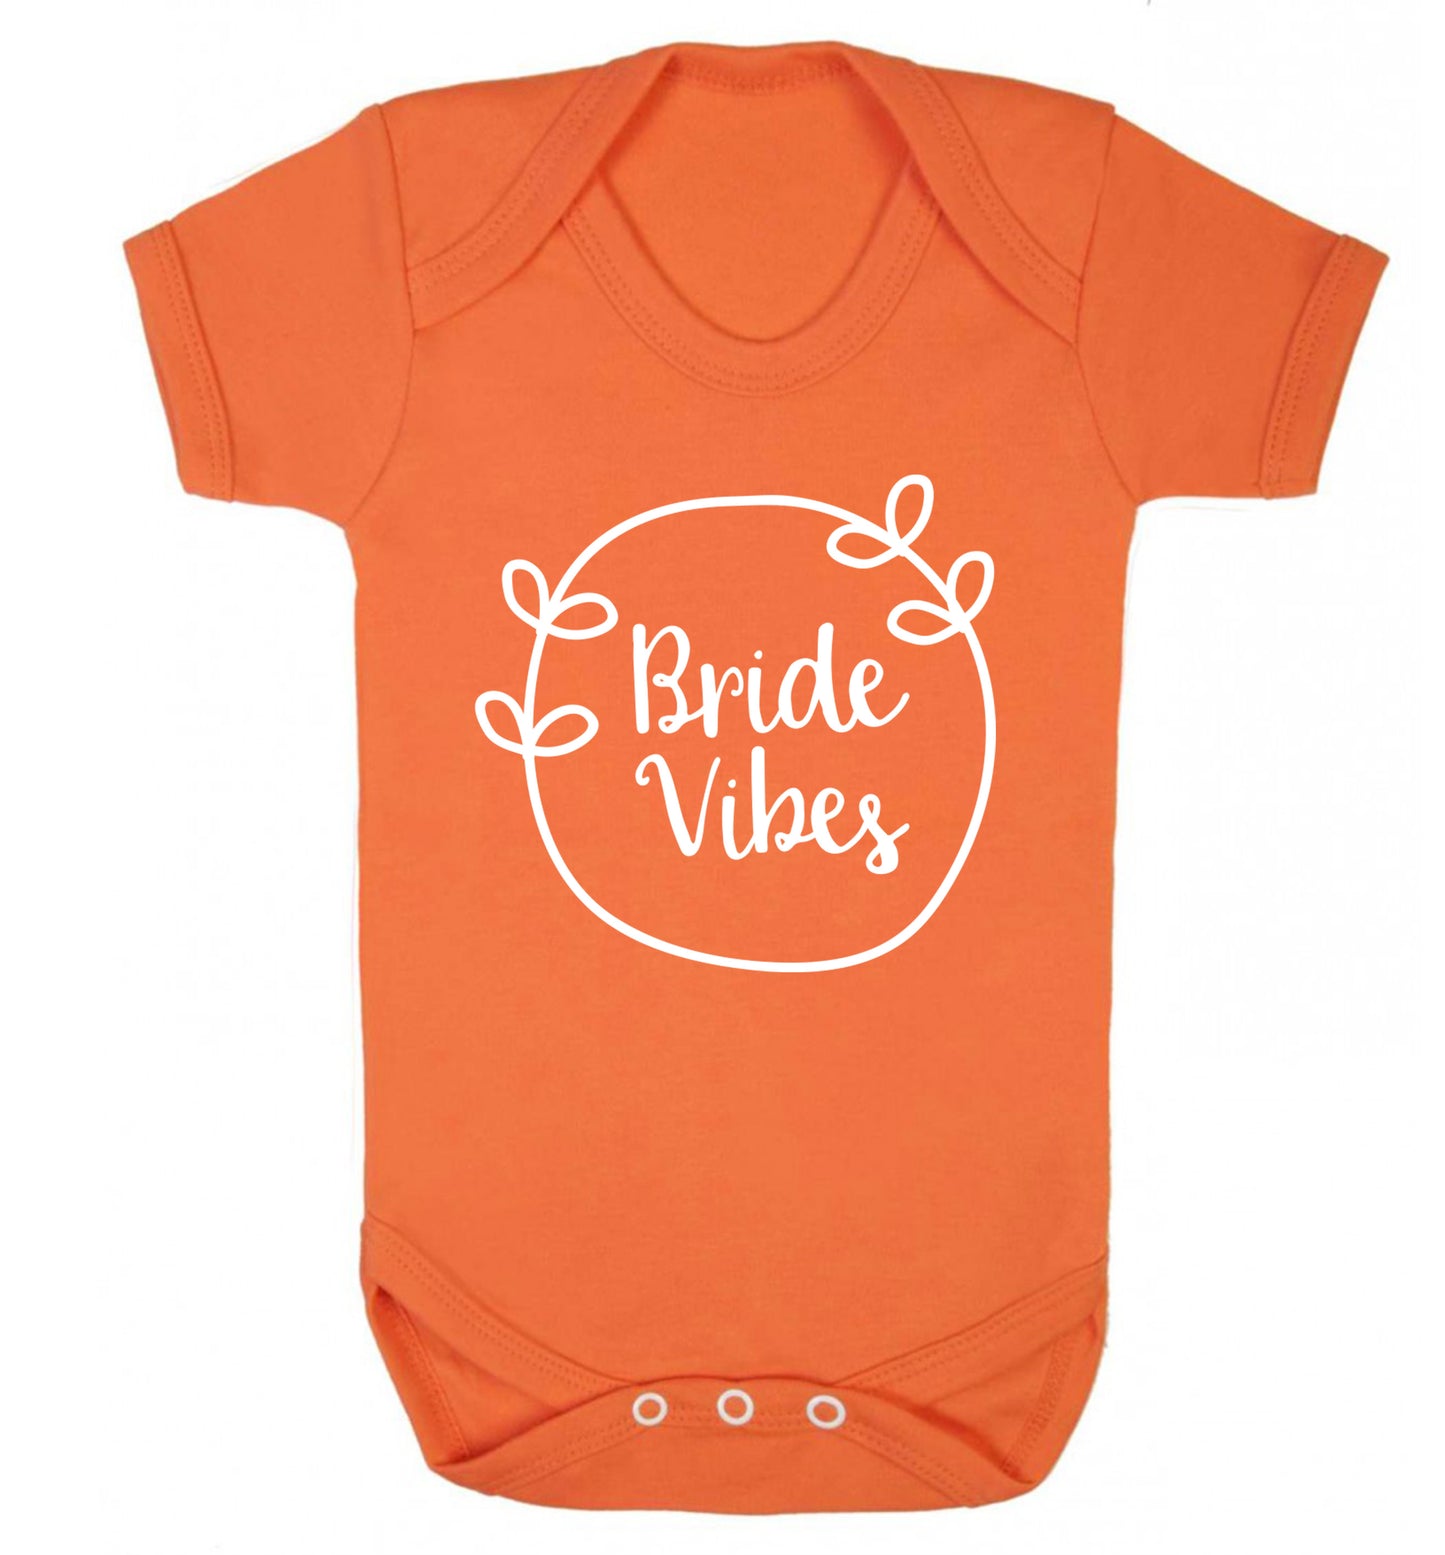 Bride Vibes Baby Vest orange 18-24 months